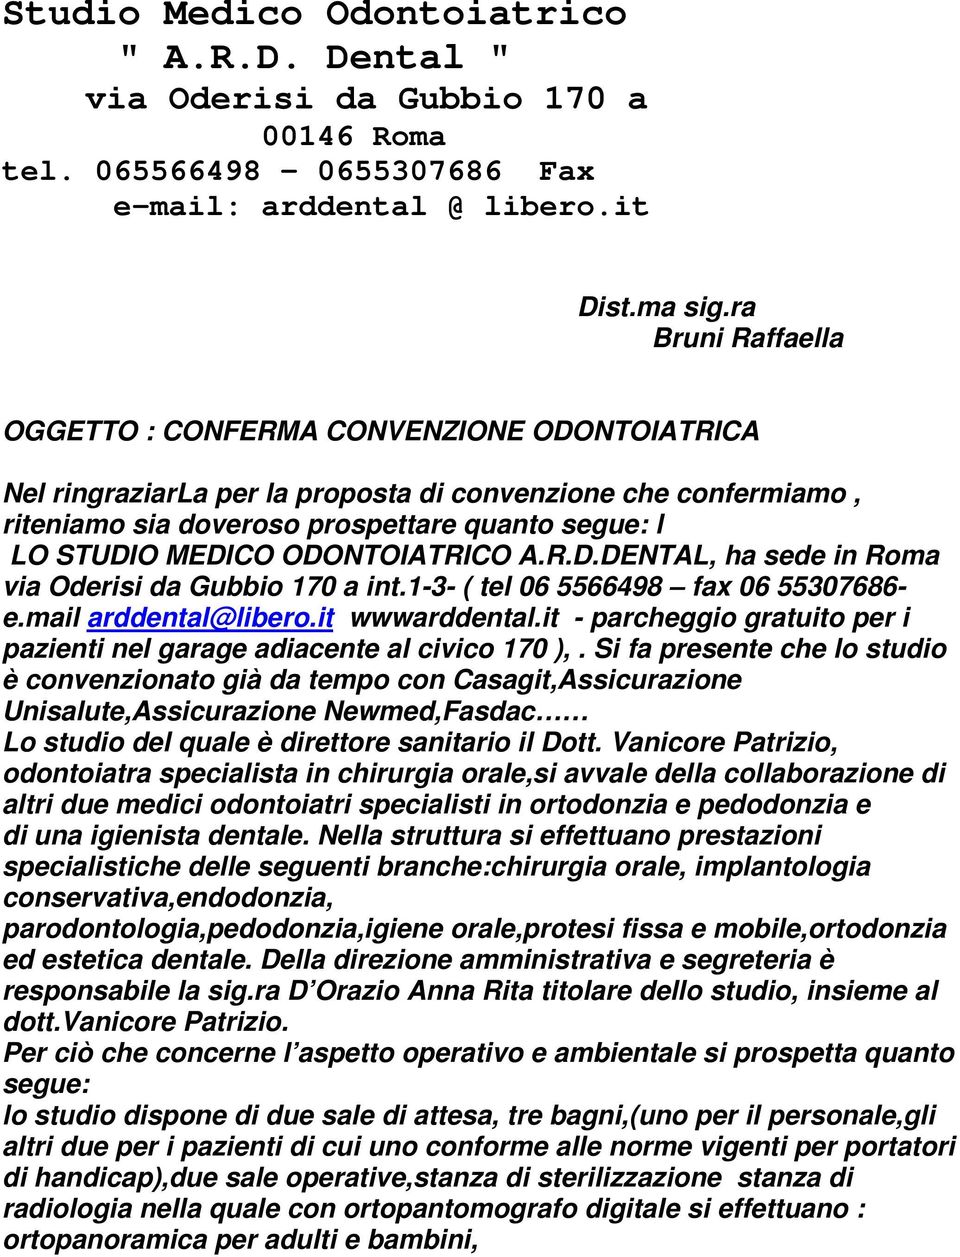 ODONTOIATRICO A.R.D.DENTAL, ha sede in Roma via Oderisi da Gubbio 170 a int.1-3- ( tel 06 5566498 fax 06 55307686- e.mail arddental@libero.it wwwarddental.